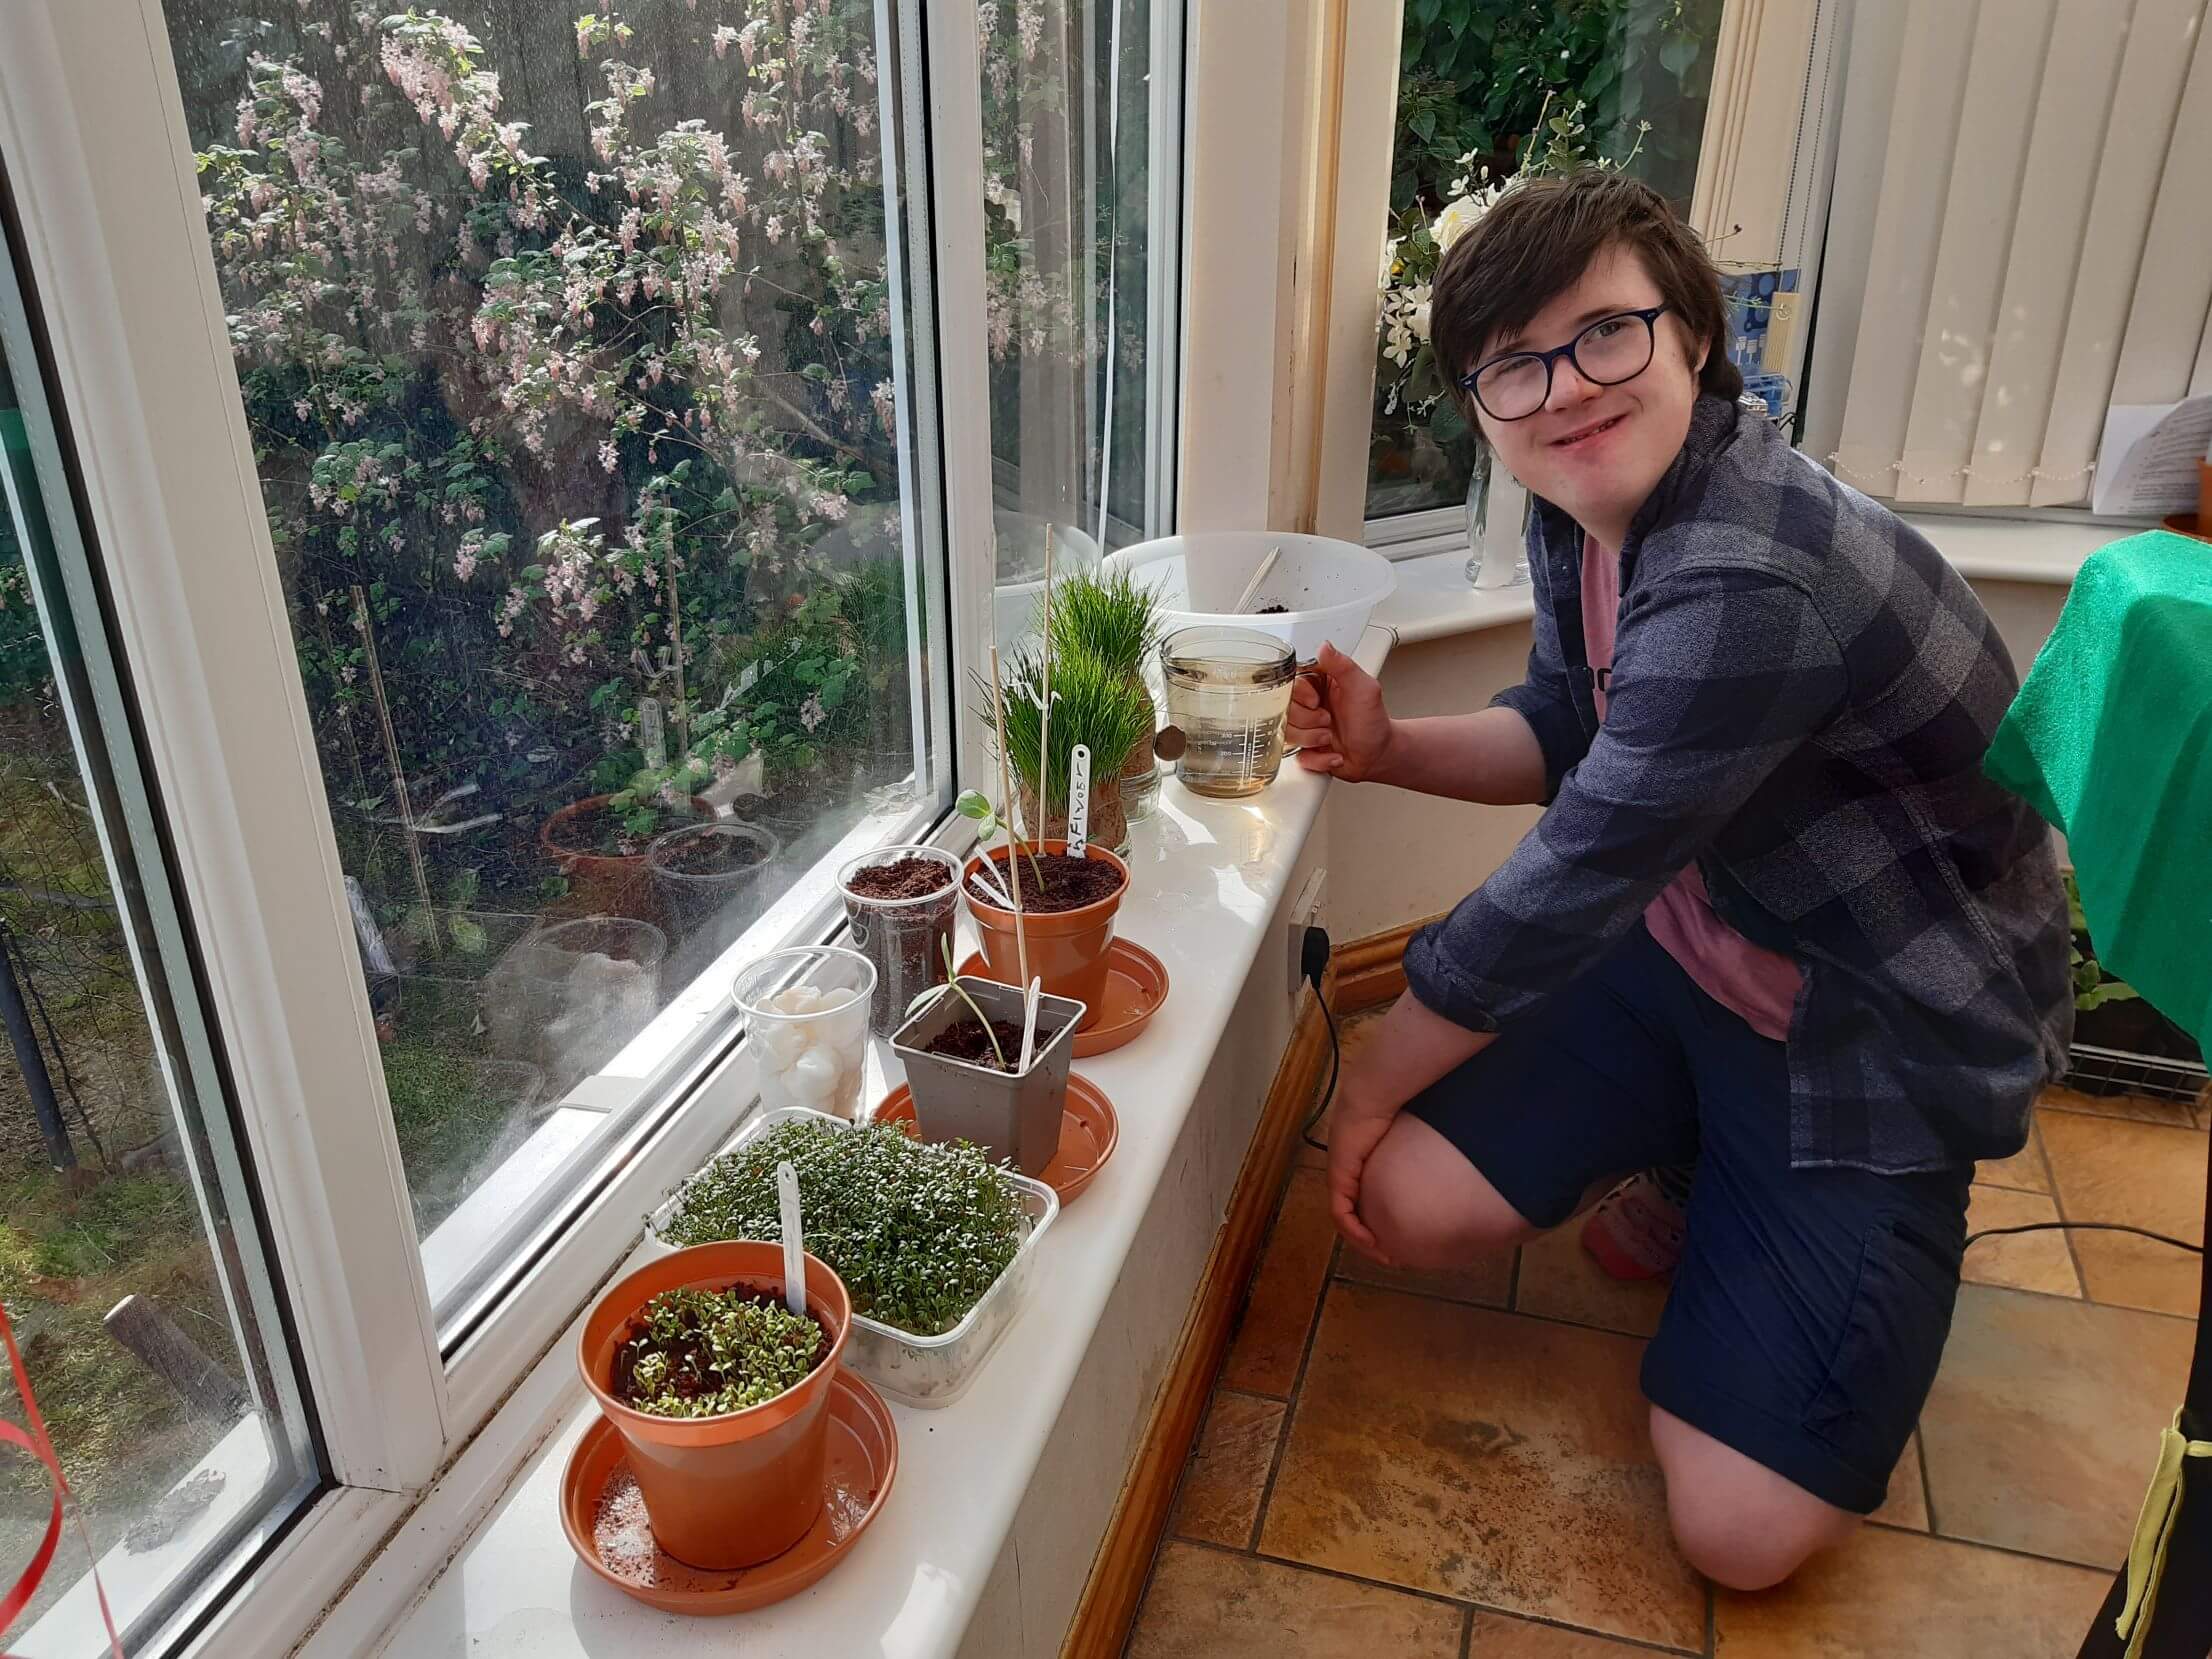 A teenage boy watering plants he has grown.